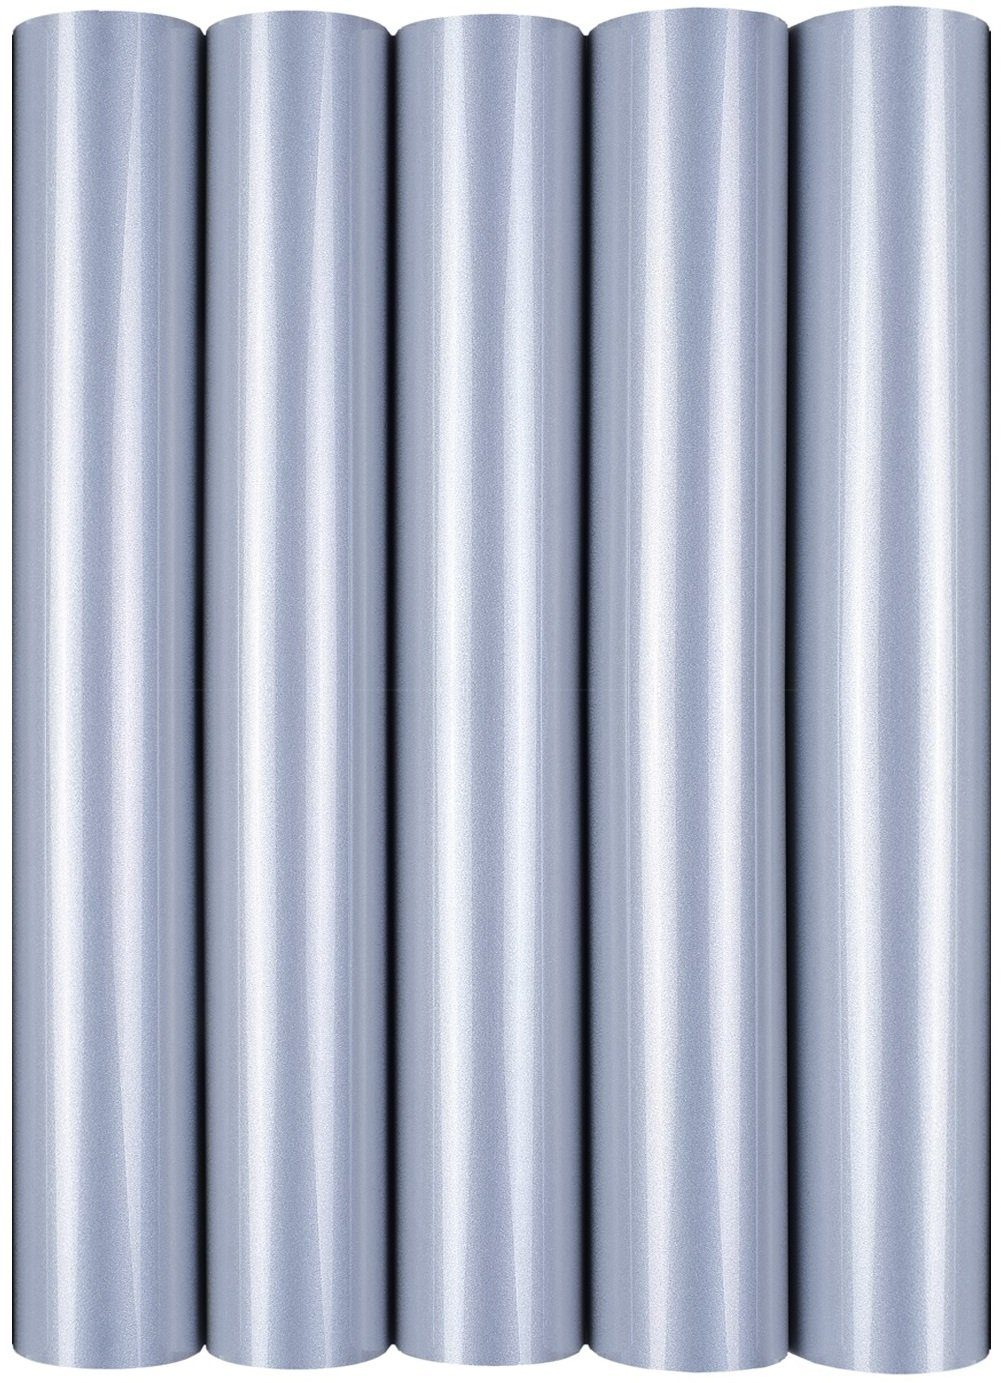 Hilltop Transparentpapier Reflektierende Transferfolie, Textilfolie, mehrfarbig, 30x20 cm Reflective Silver | Papier